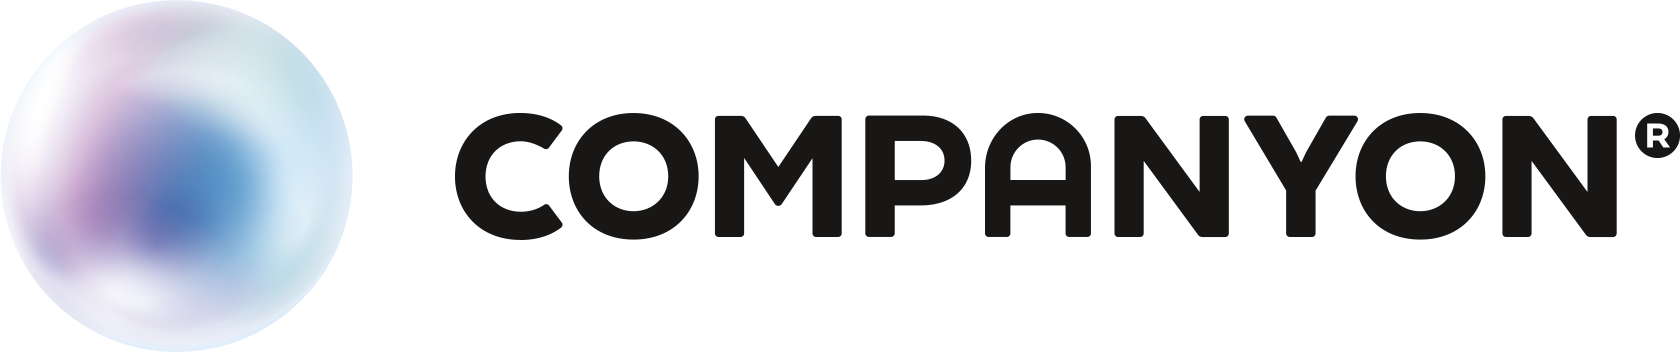 Companyon Logo